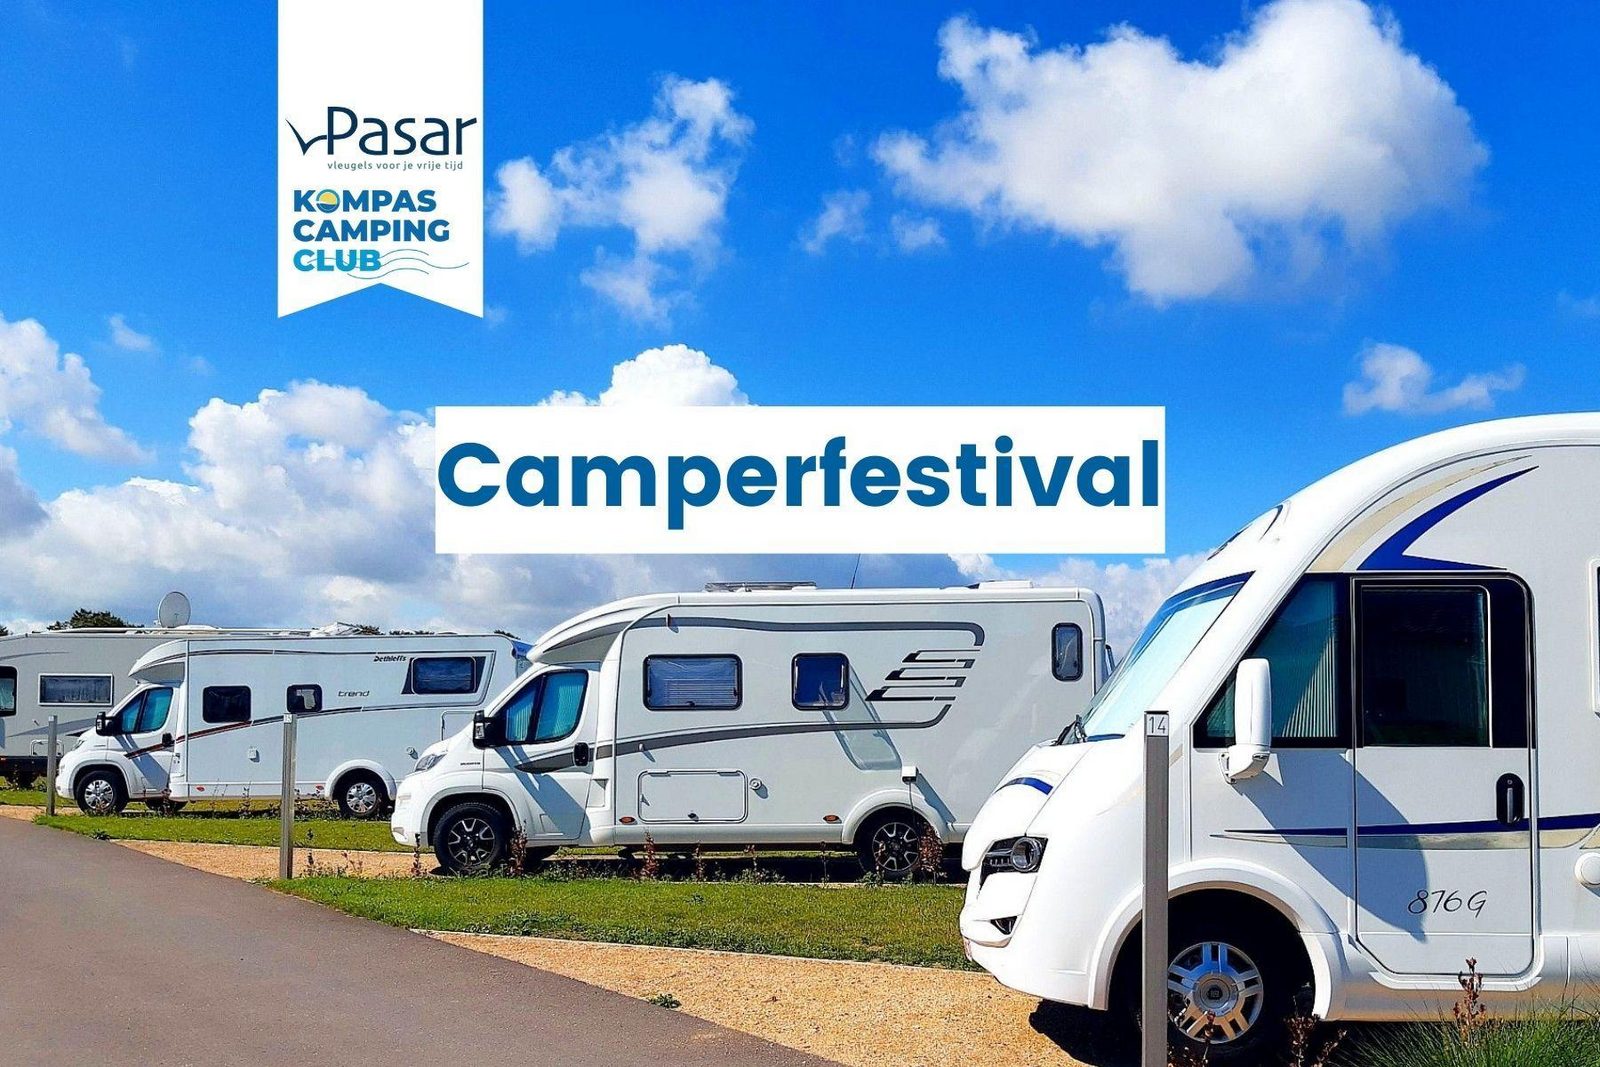 Camperfestival - Pasar & Kompas Camping Club